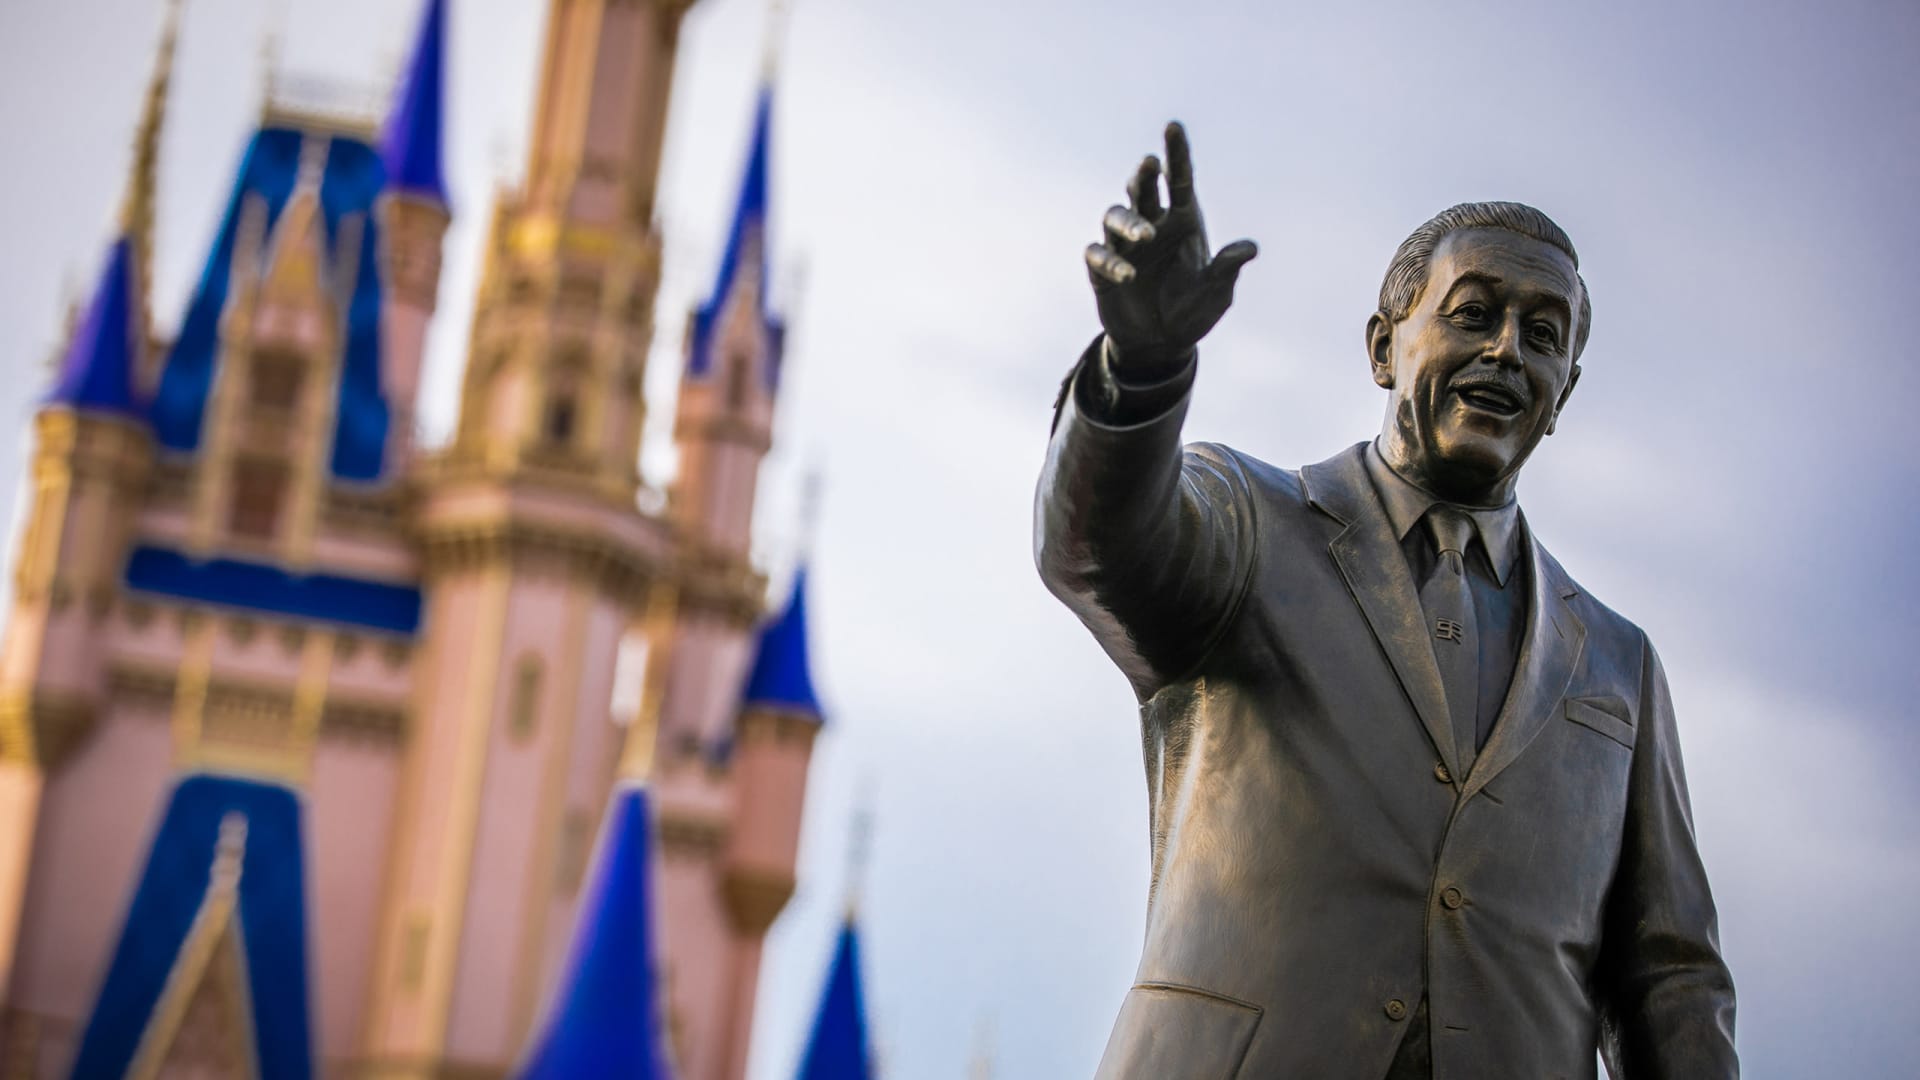 View of the Walt Disney statue in front of Cinderella Castle inside the Magic Kingdom Park at Walt Disney World Resort in Lake Buena Vista, Florida.